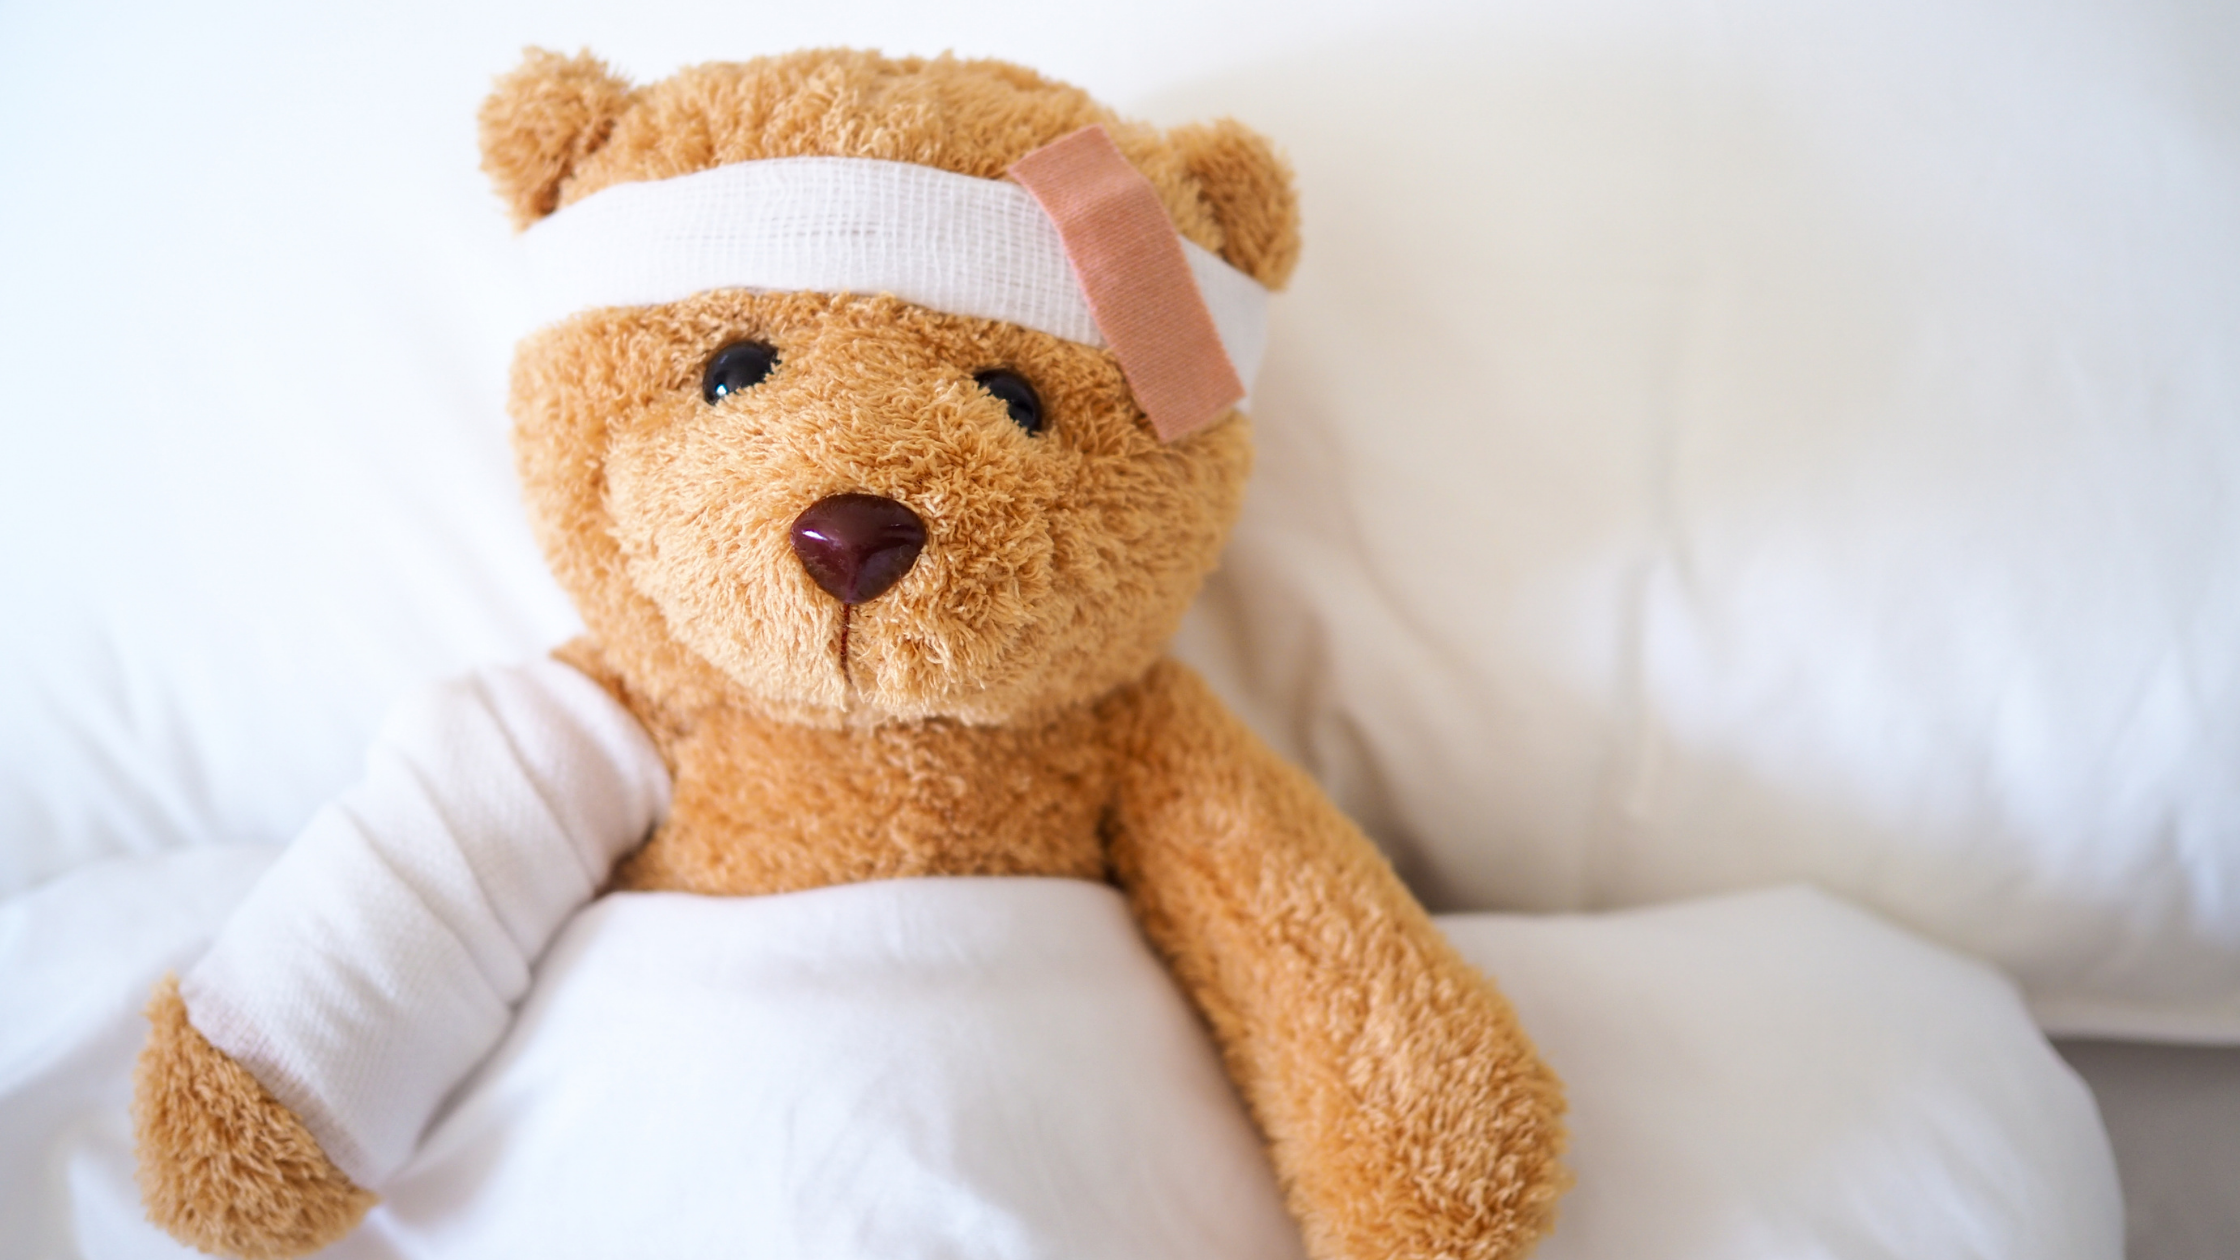 Teddy Bear in hospital bed